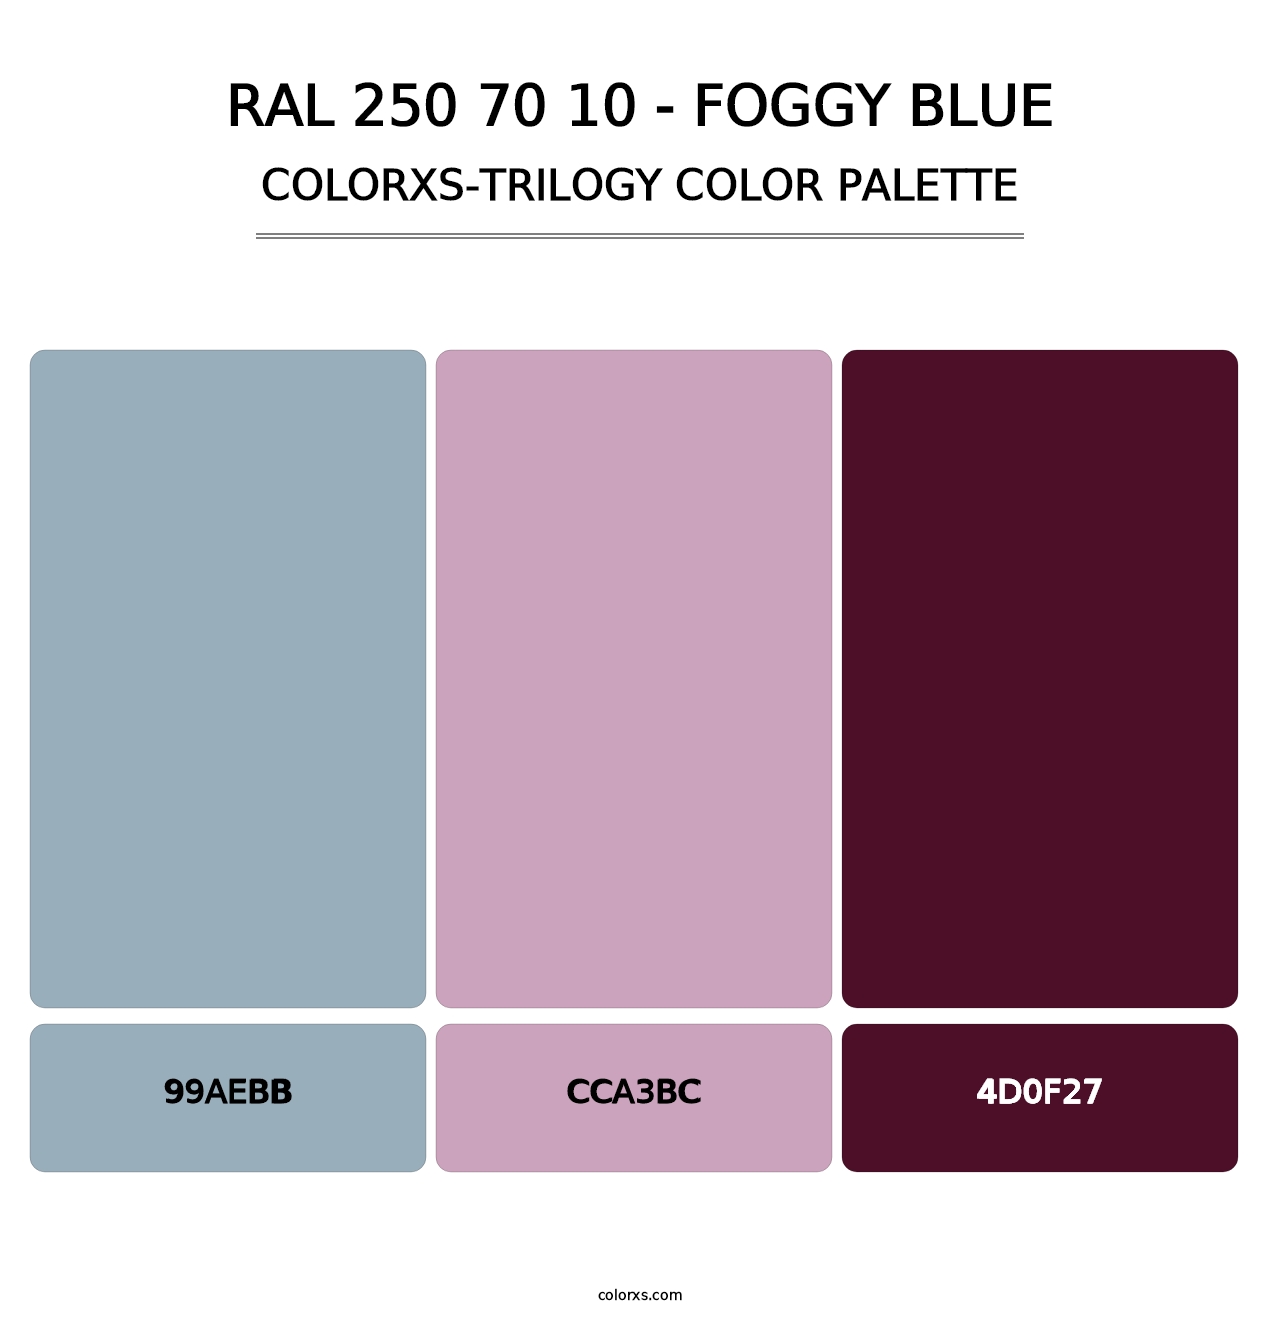 RAL 250 70 10 - Foggy Blue - Colorxs Trilogy Palette